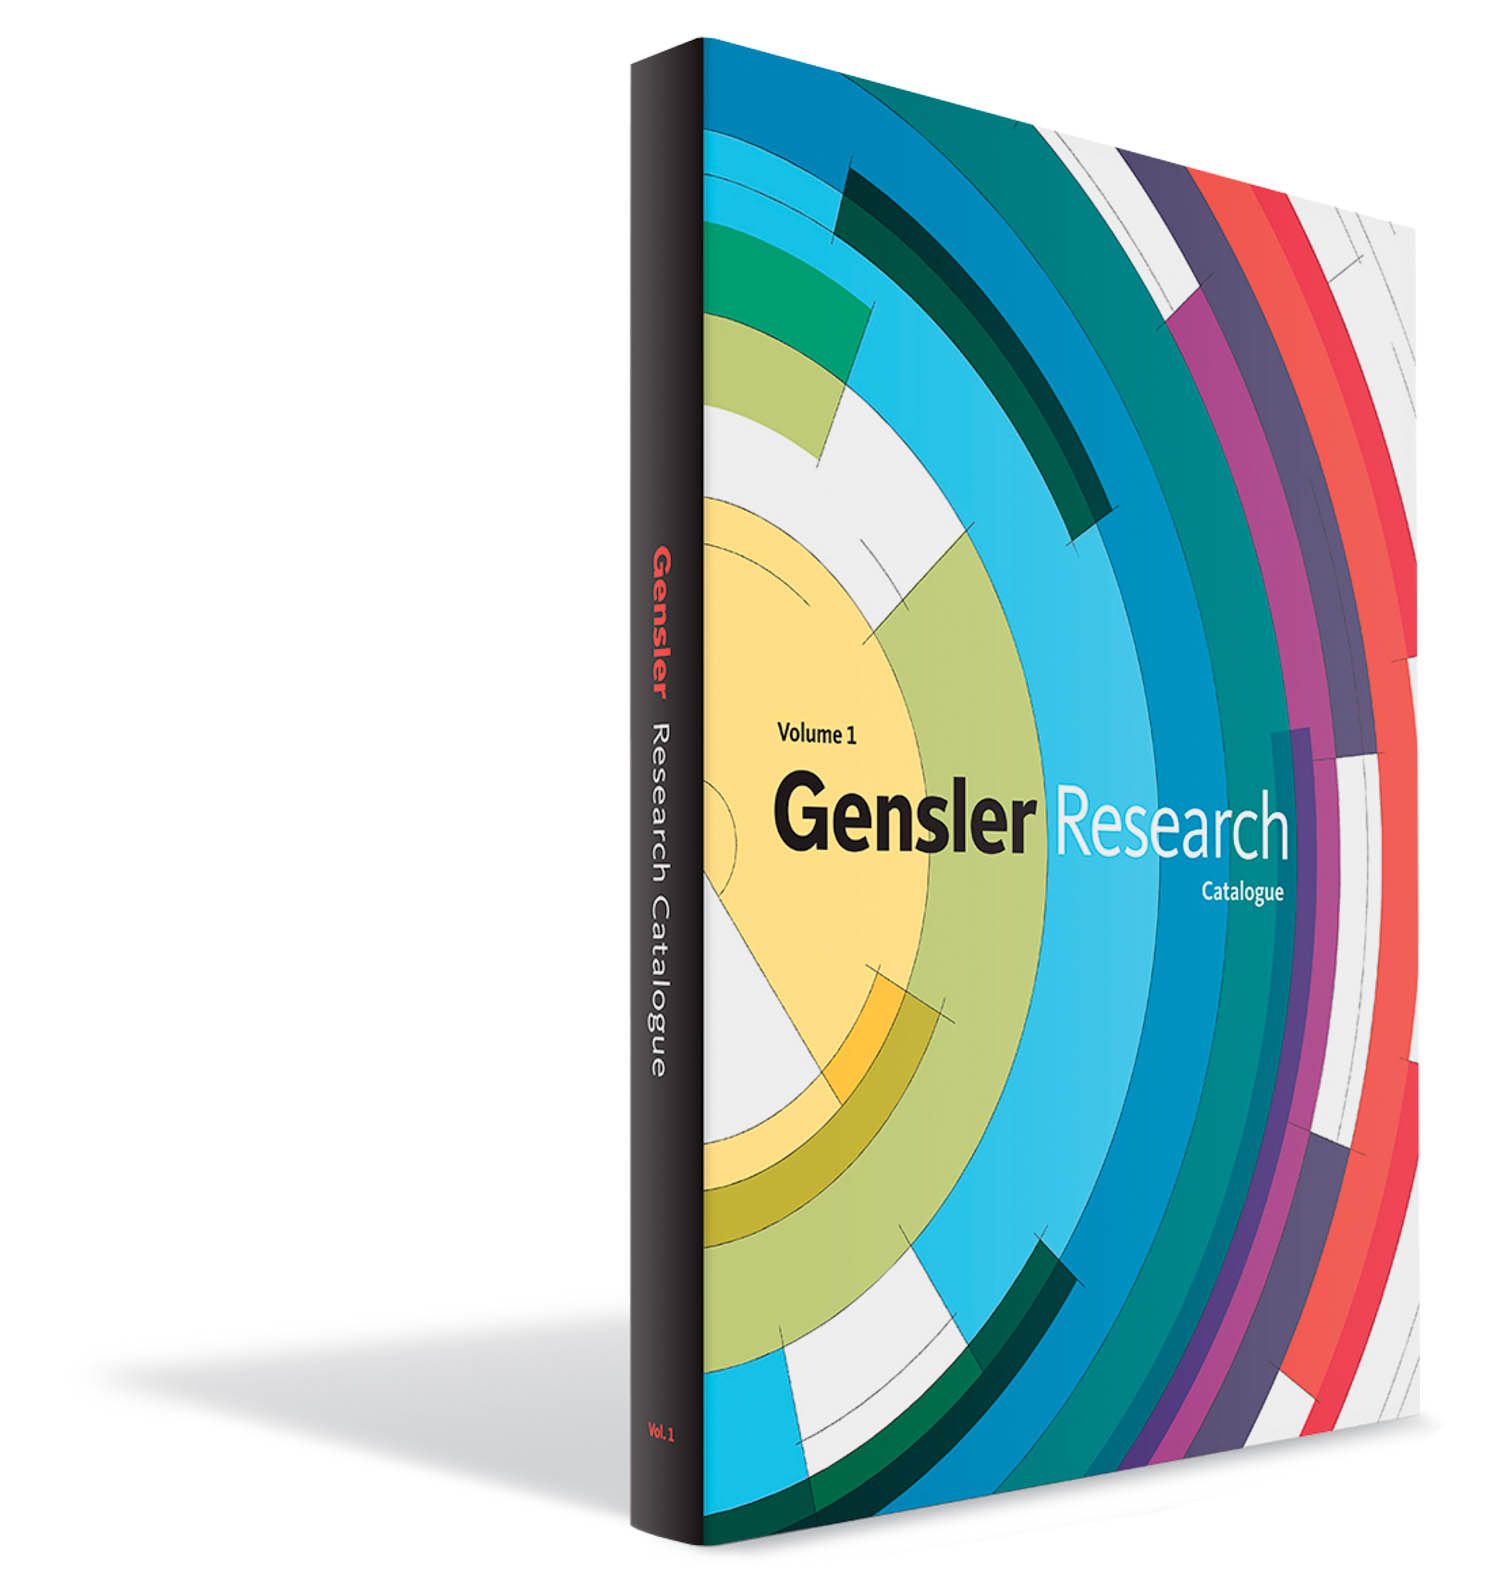 2017: Gensler Research 10-year anniversary.